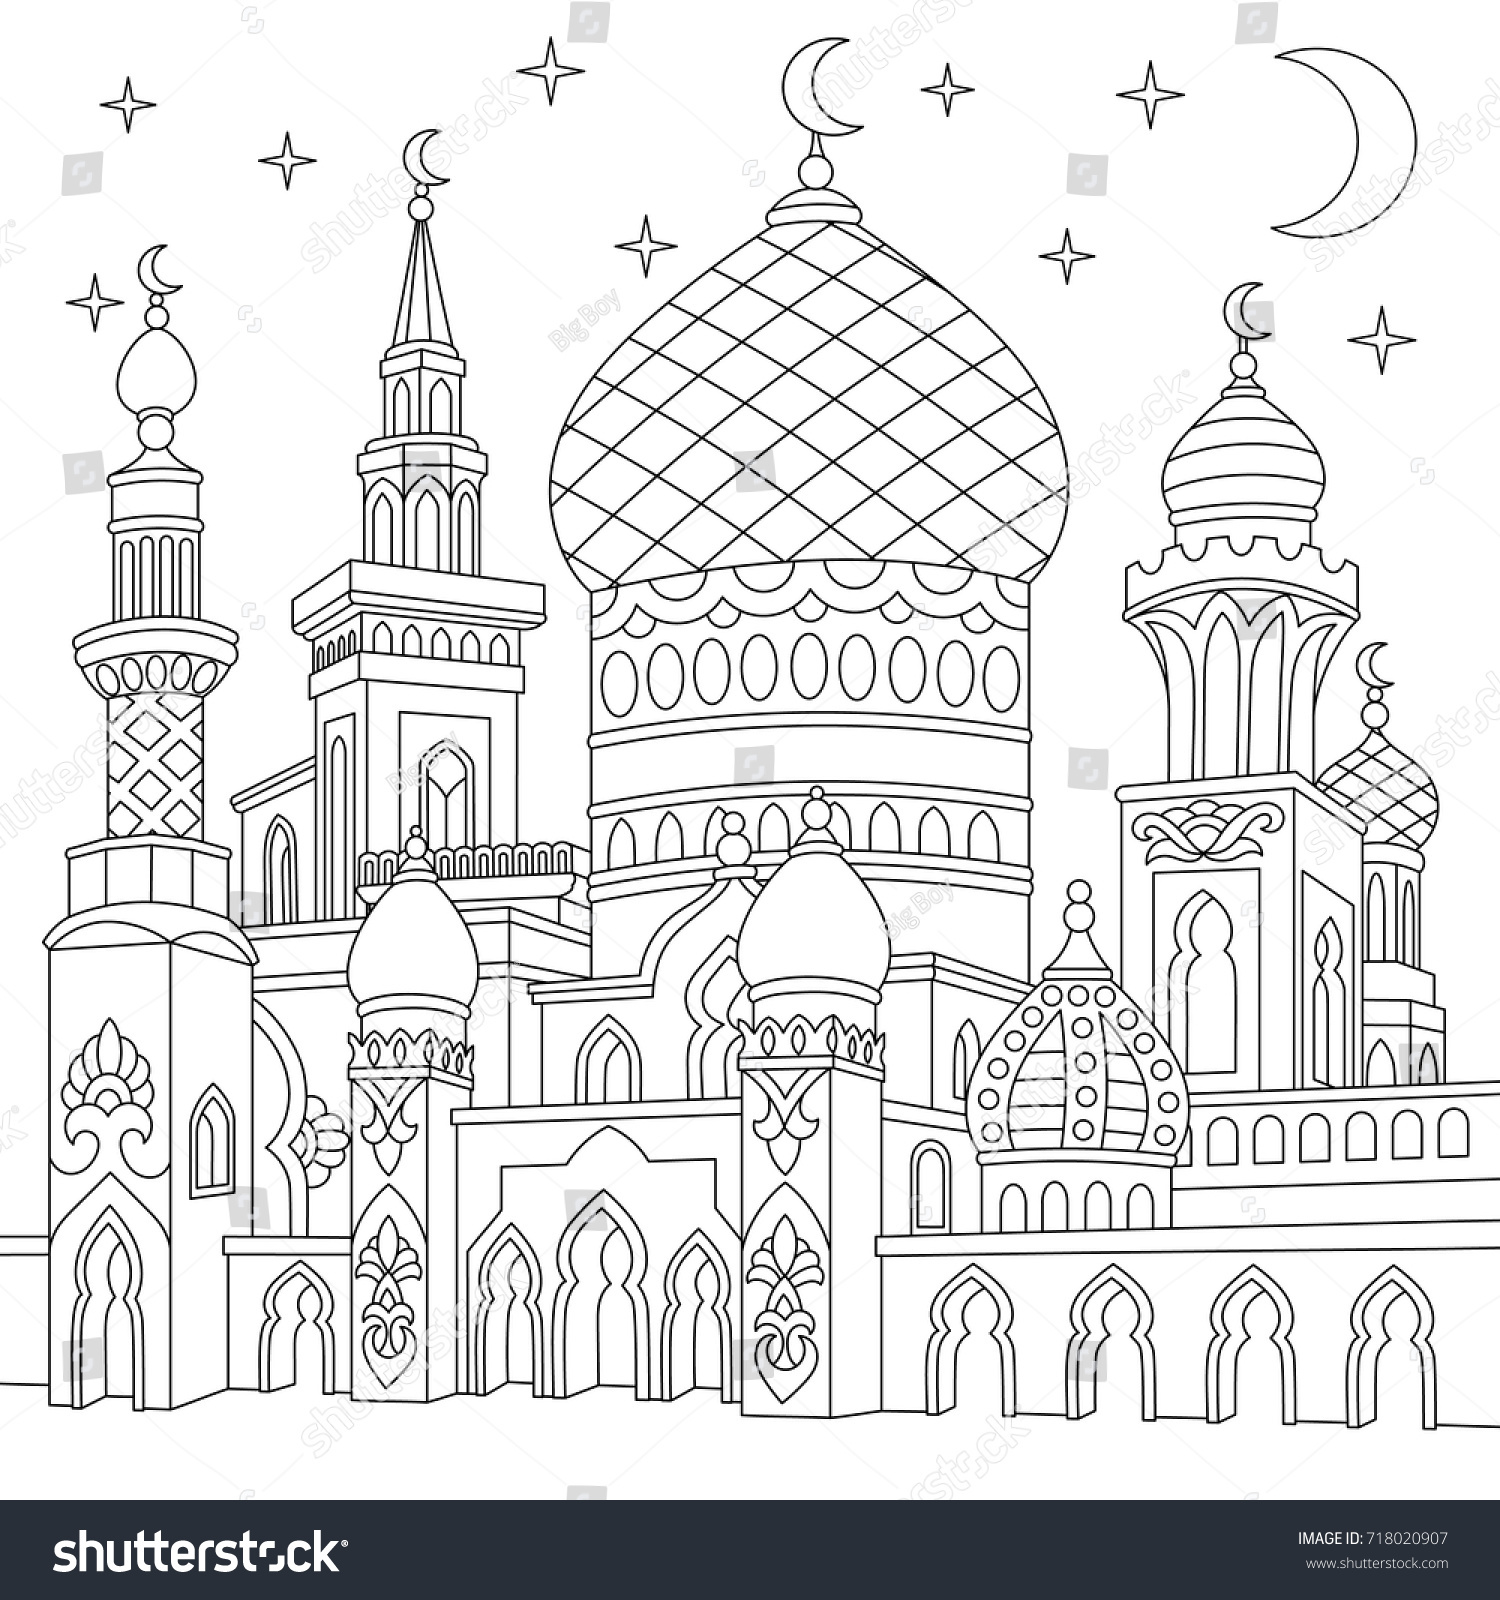 Muslim coloring Images, Stock Photos & Vectors   Shutterstock